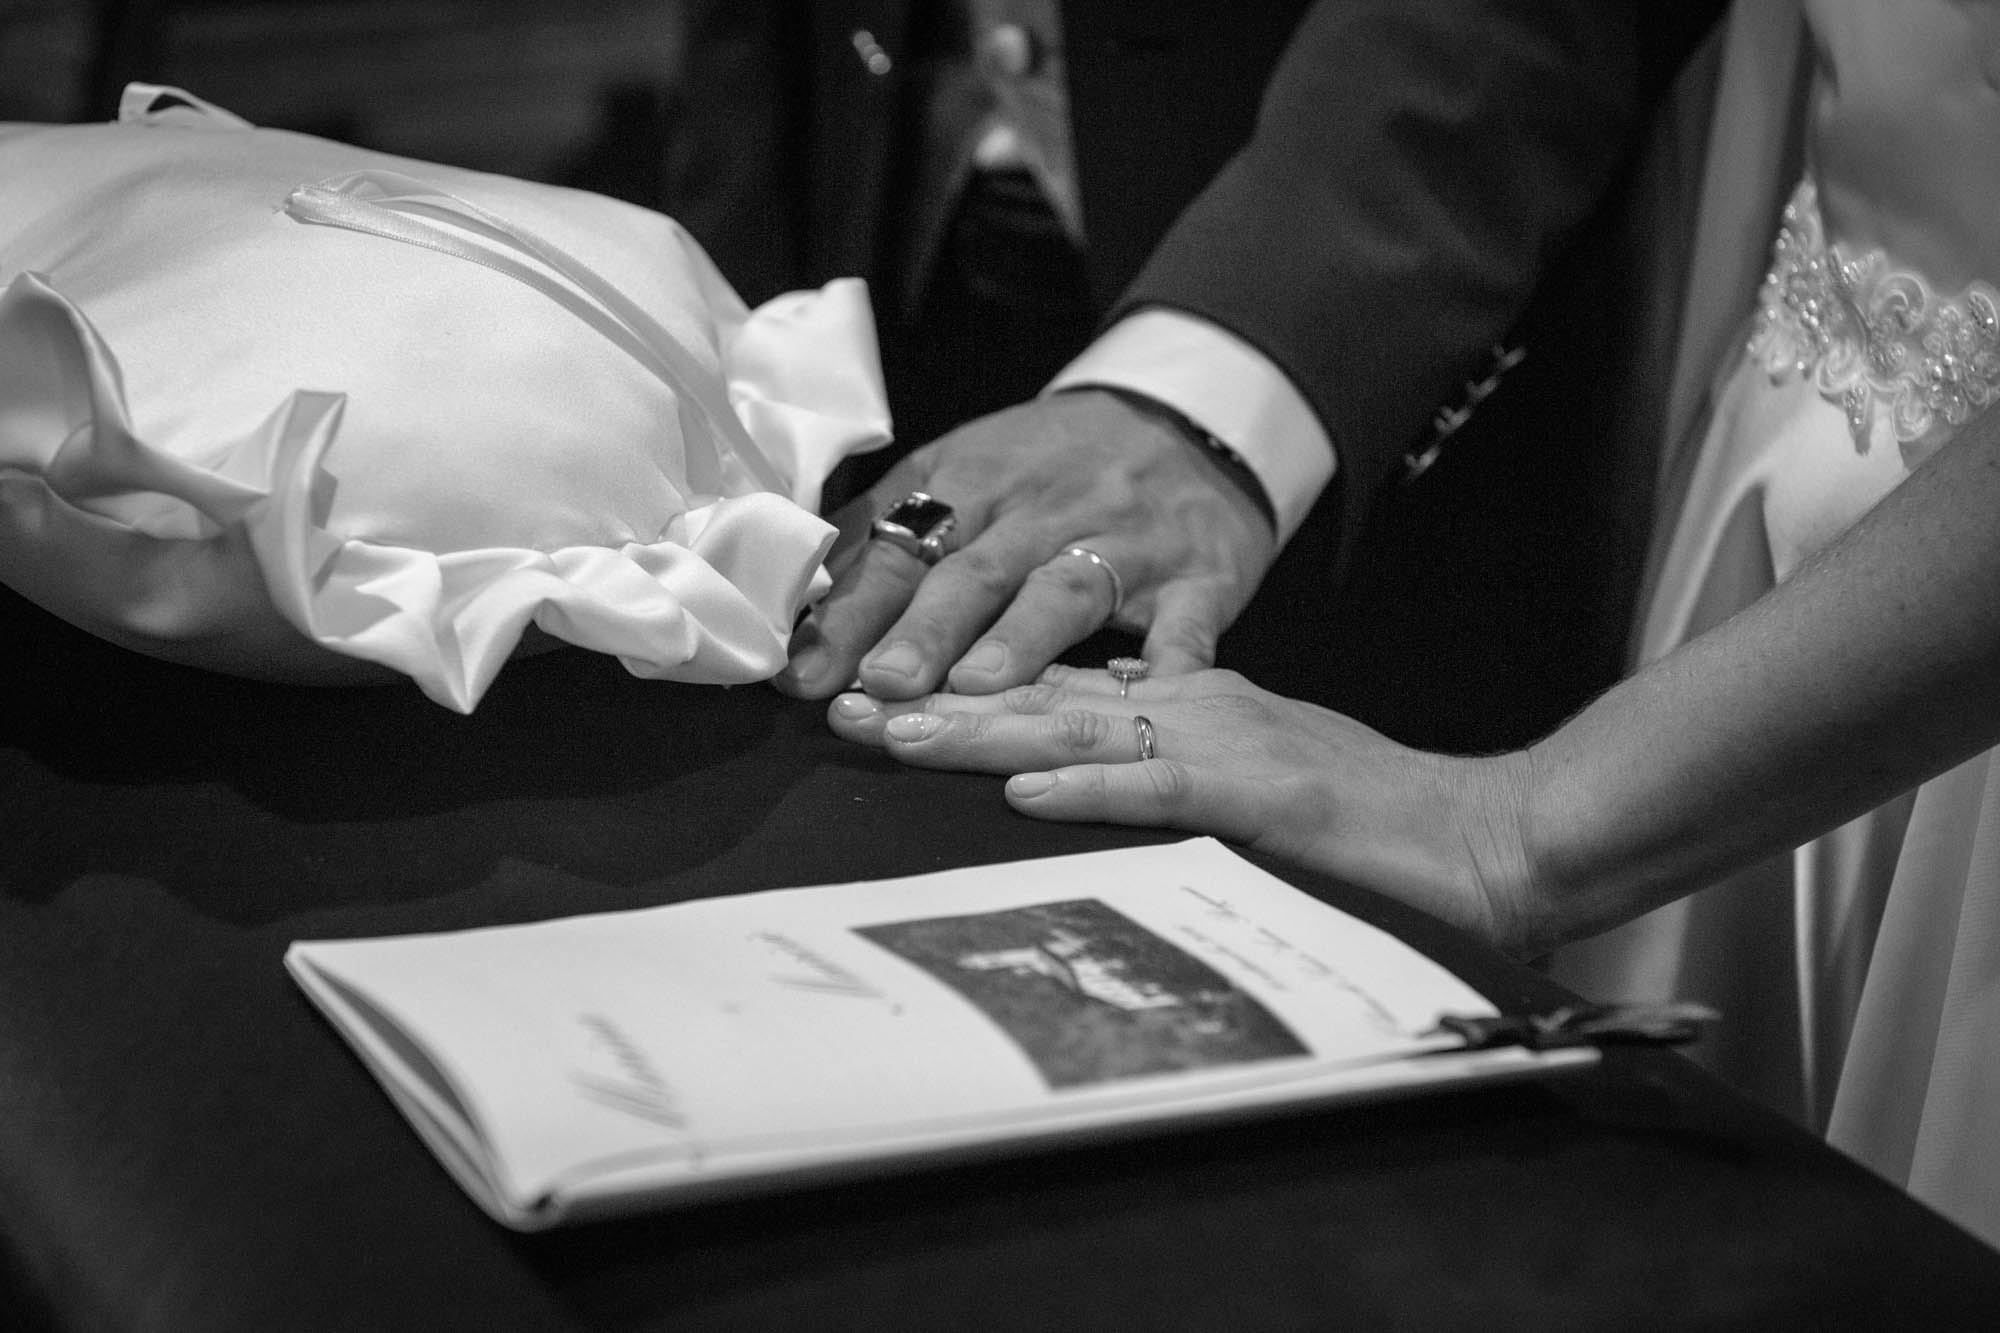 Valsesia Wedding - Servizi fotografici per matrimoni, Borgosesia, Varallo, Valsesia, Piemonte